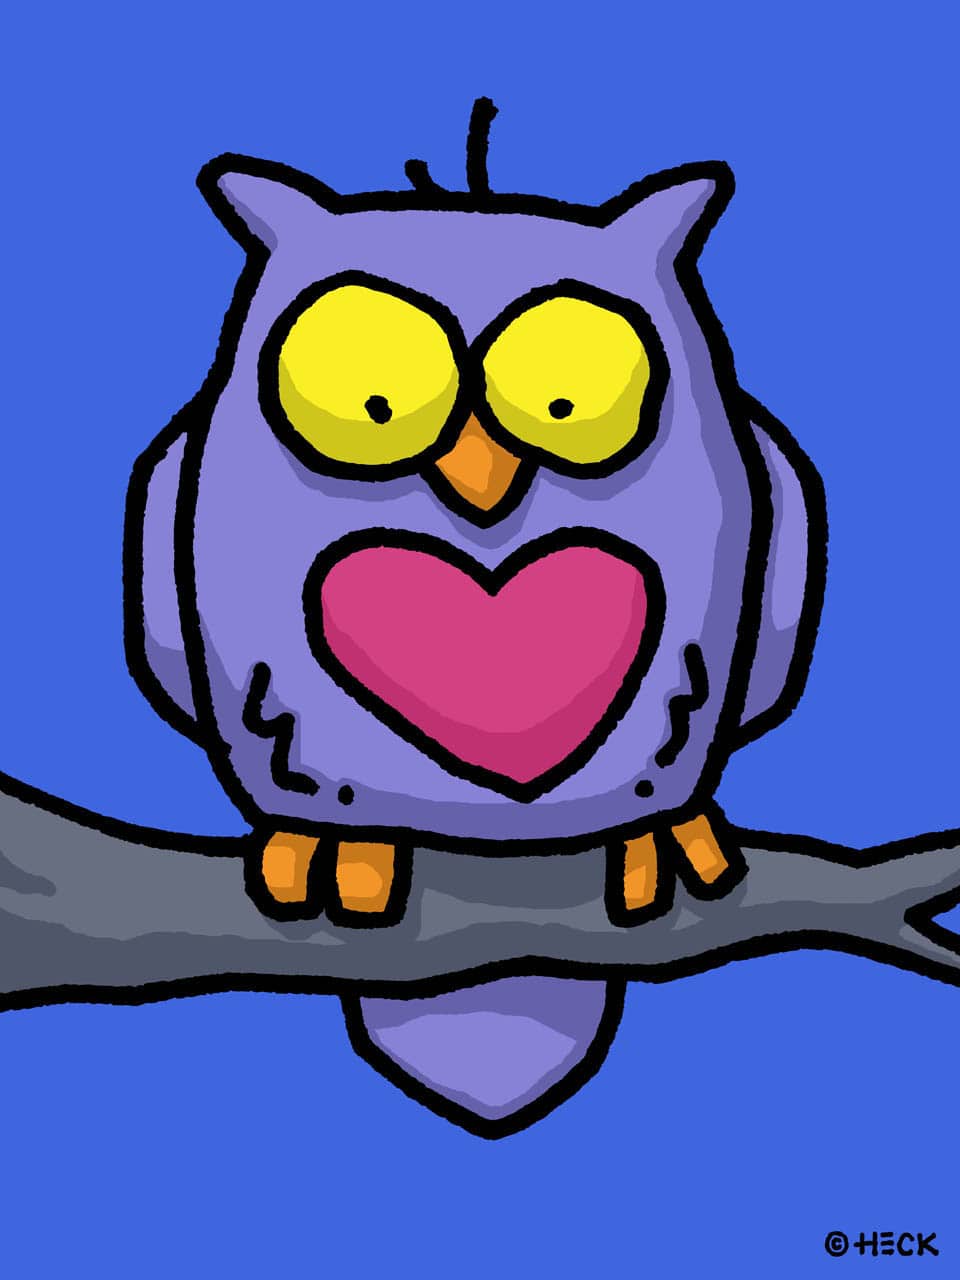 Ed-Heck-Owl-You-Need-Is-Love-Pigmentdruck